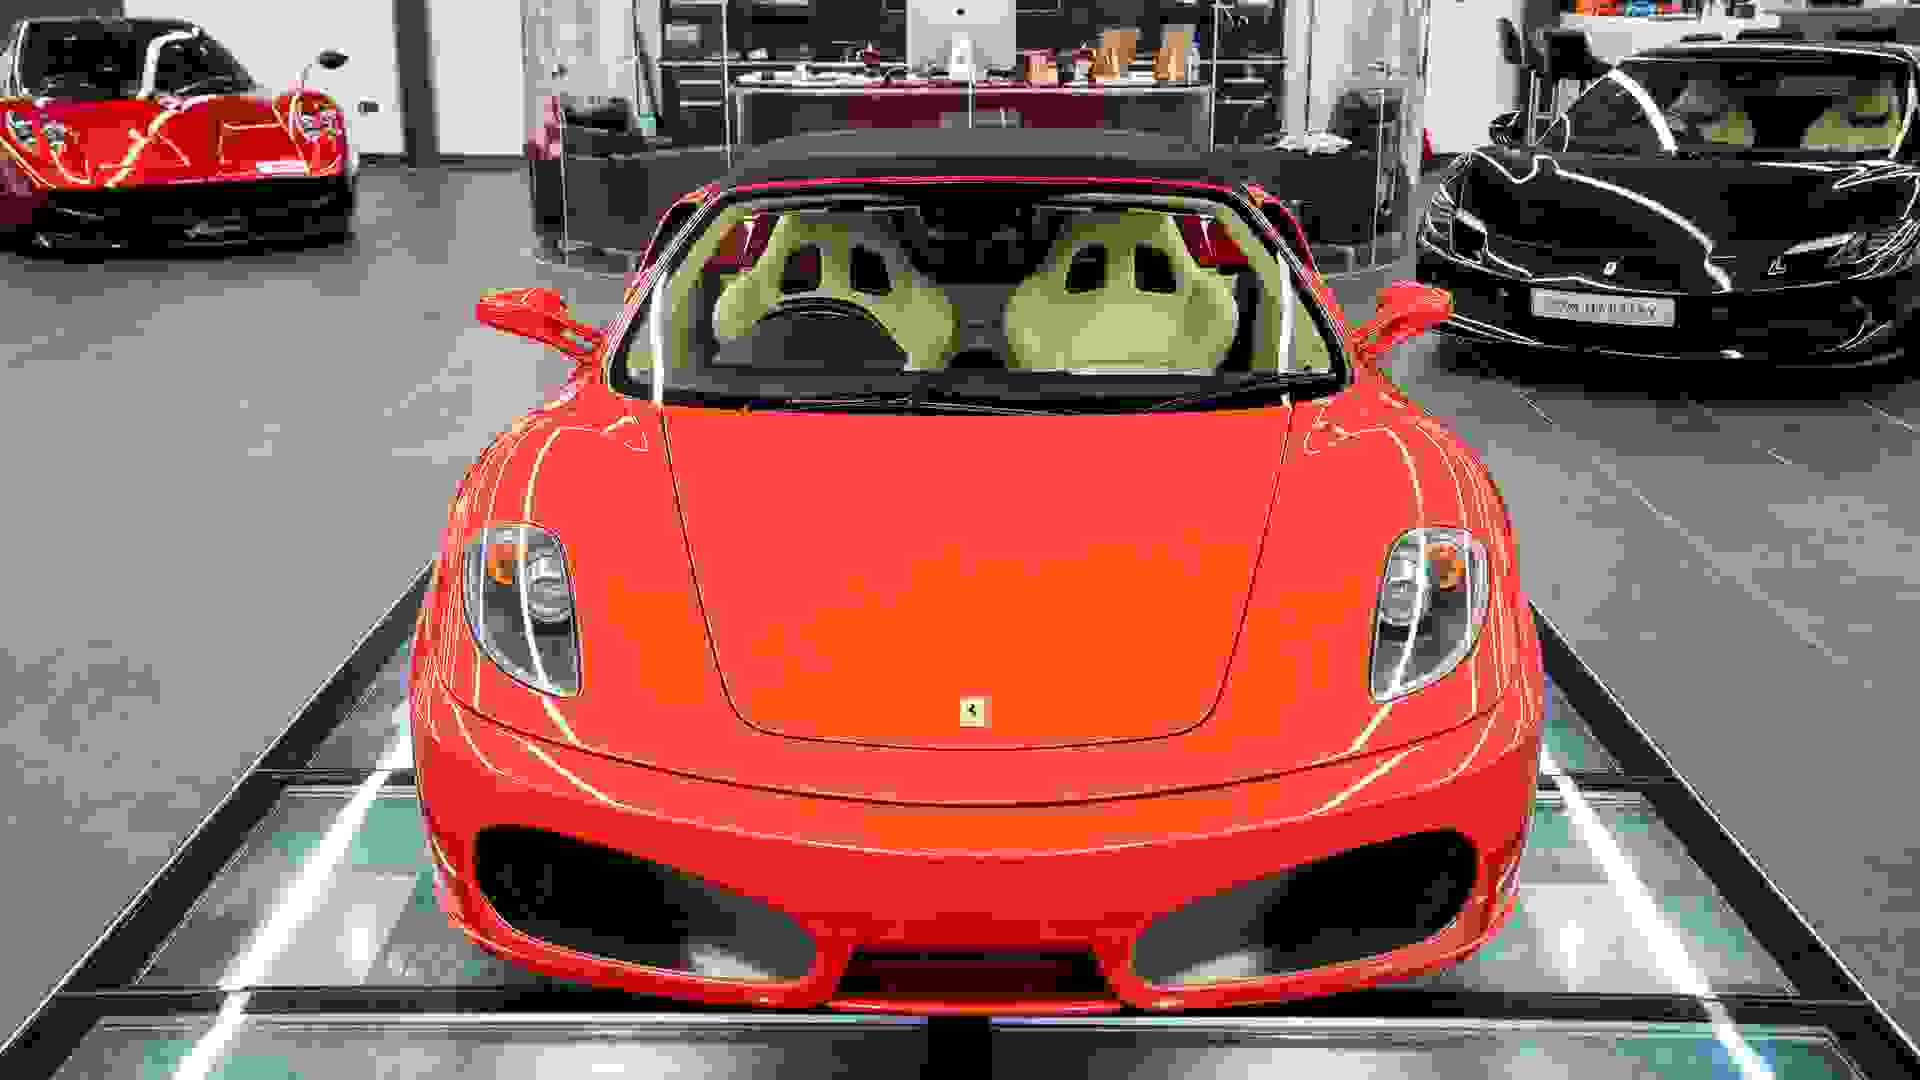 Ferrari F430 Photo 4b575850-daa8-4589-bc95-af6f19b7679c.jpg